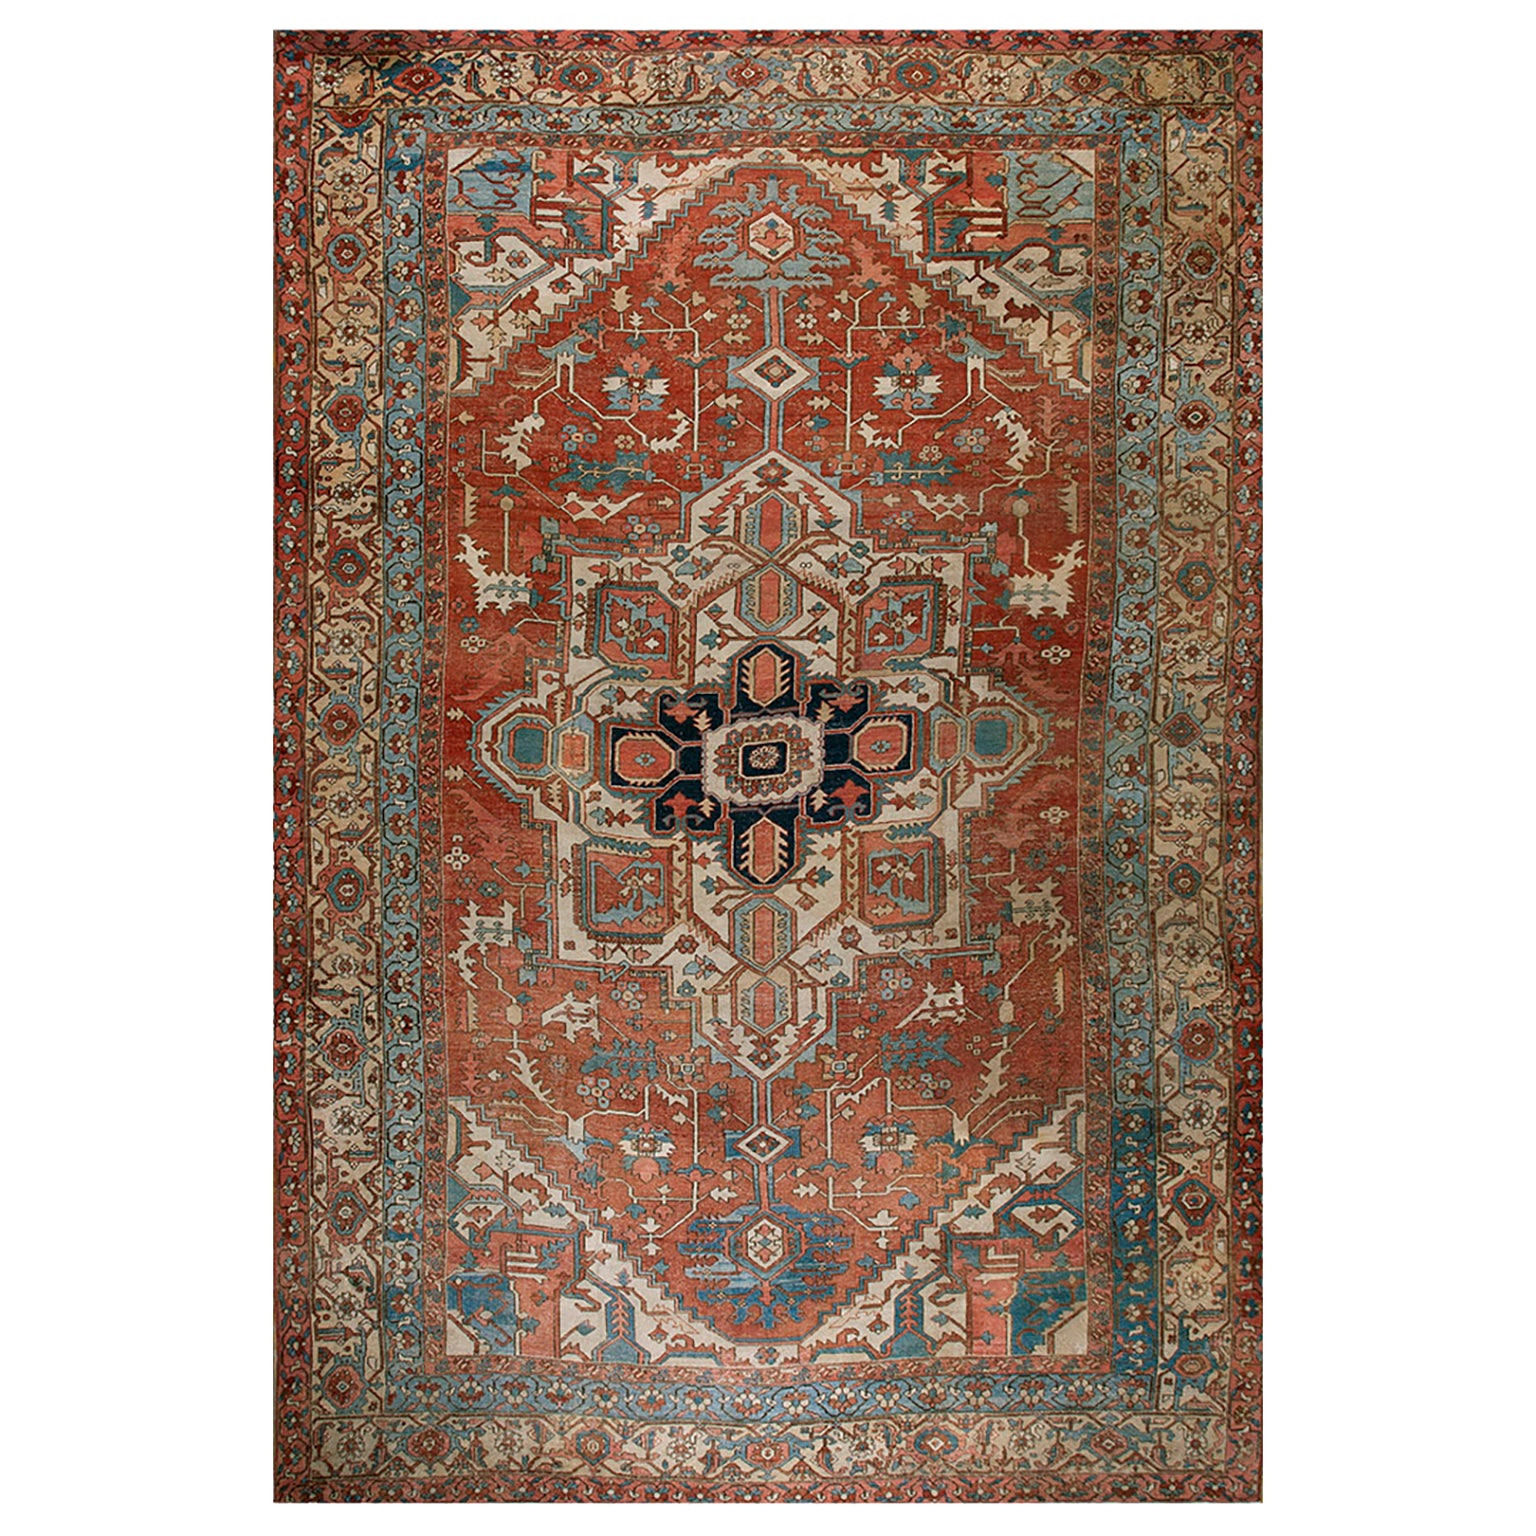 Late 19th Century Persian Serapi Carpet ( 12' x 18' - 366 x 548 cm ) For Sale